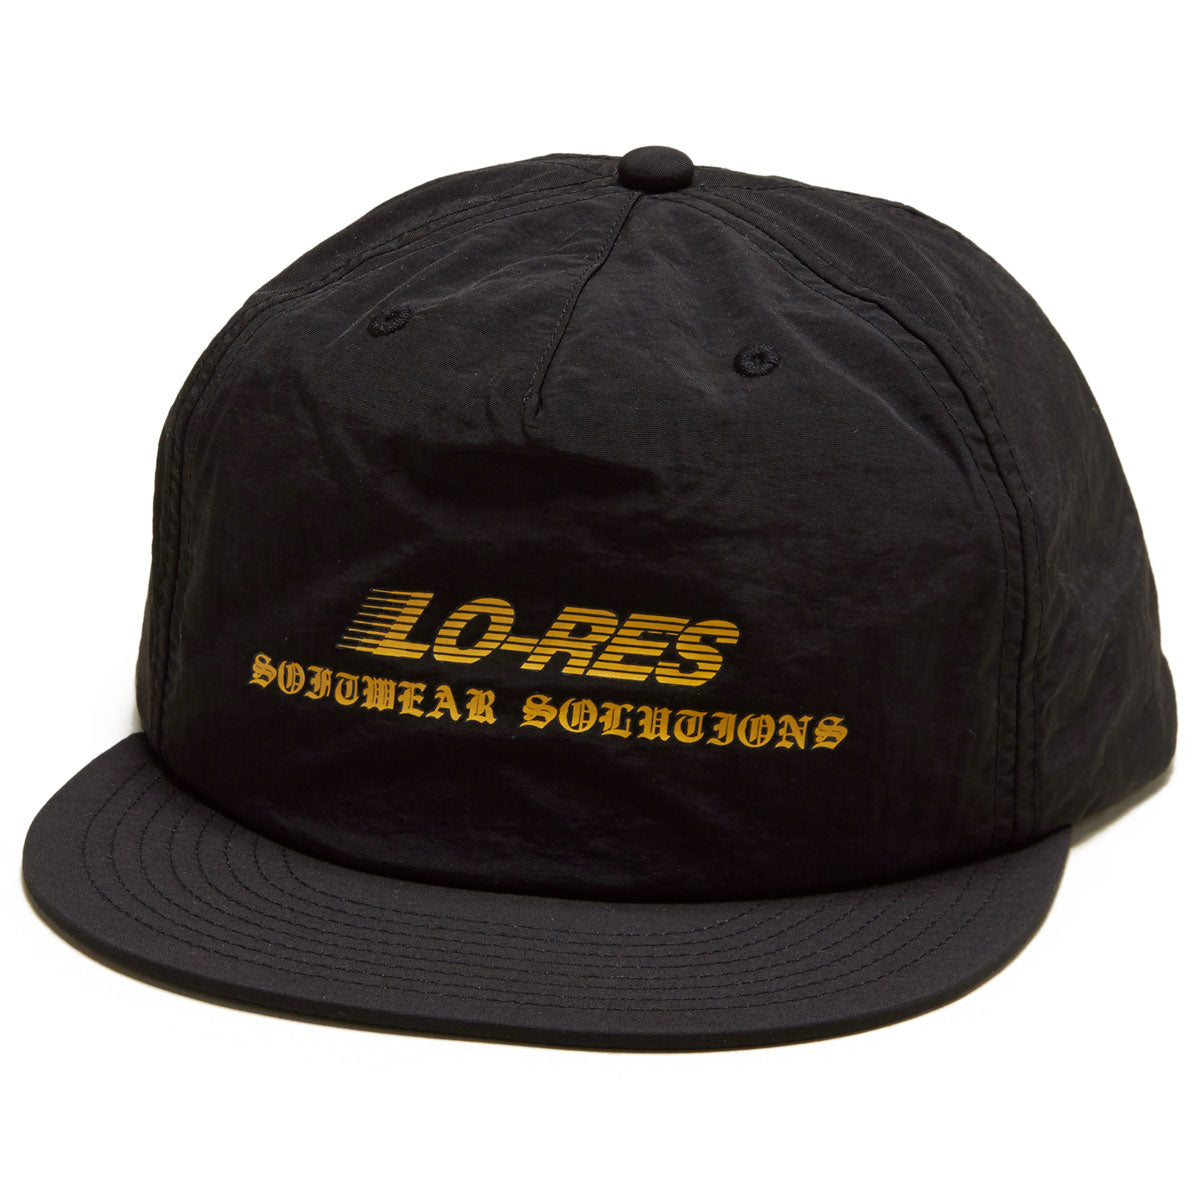 Lo-Res Speedway Hat - Black image 1